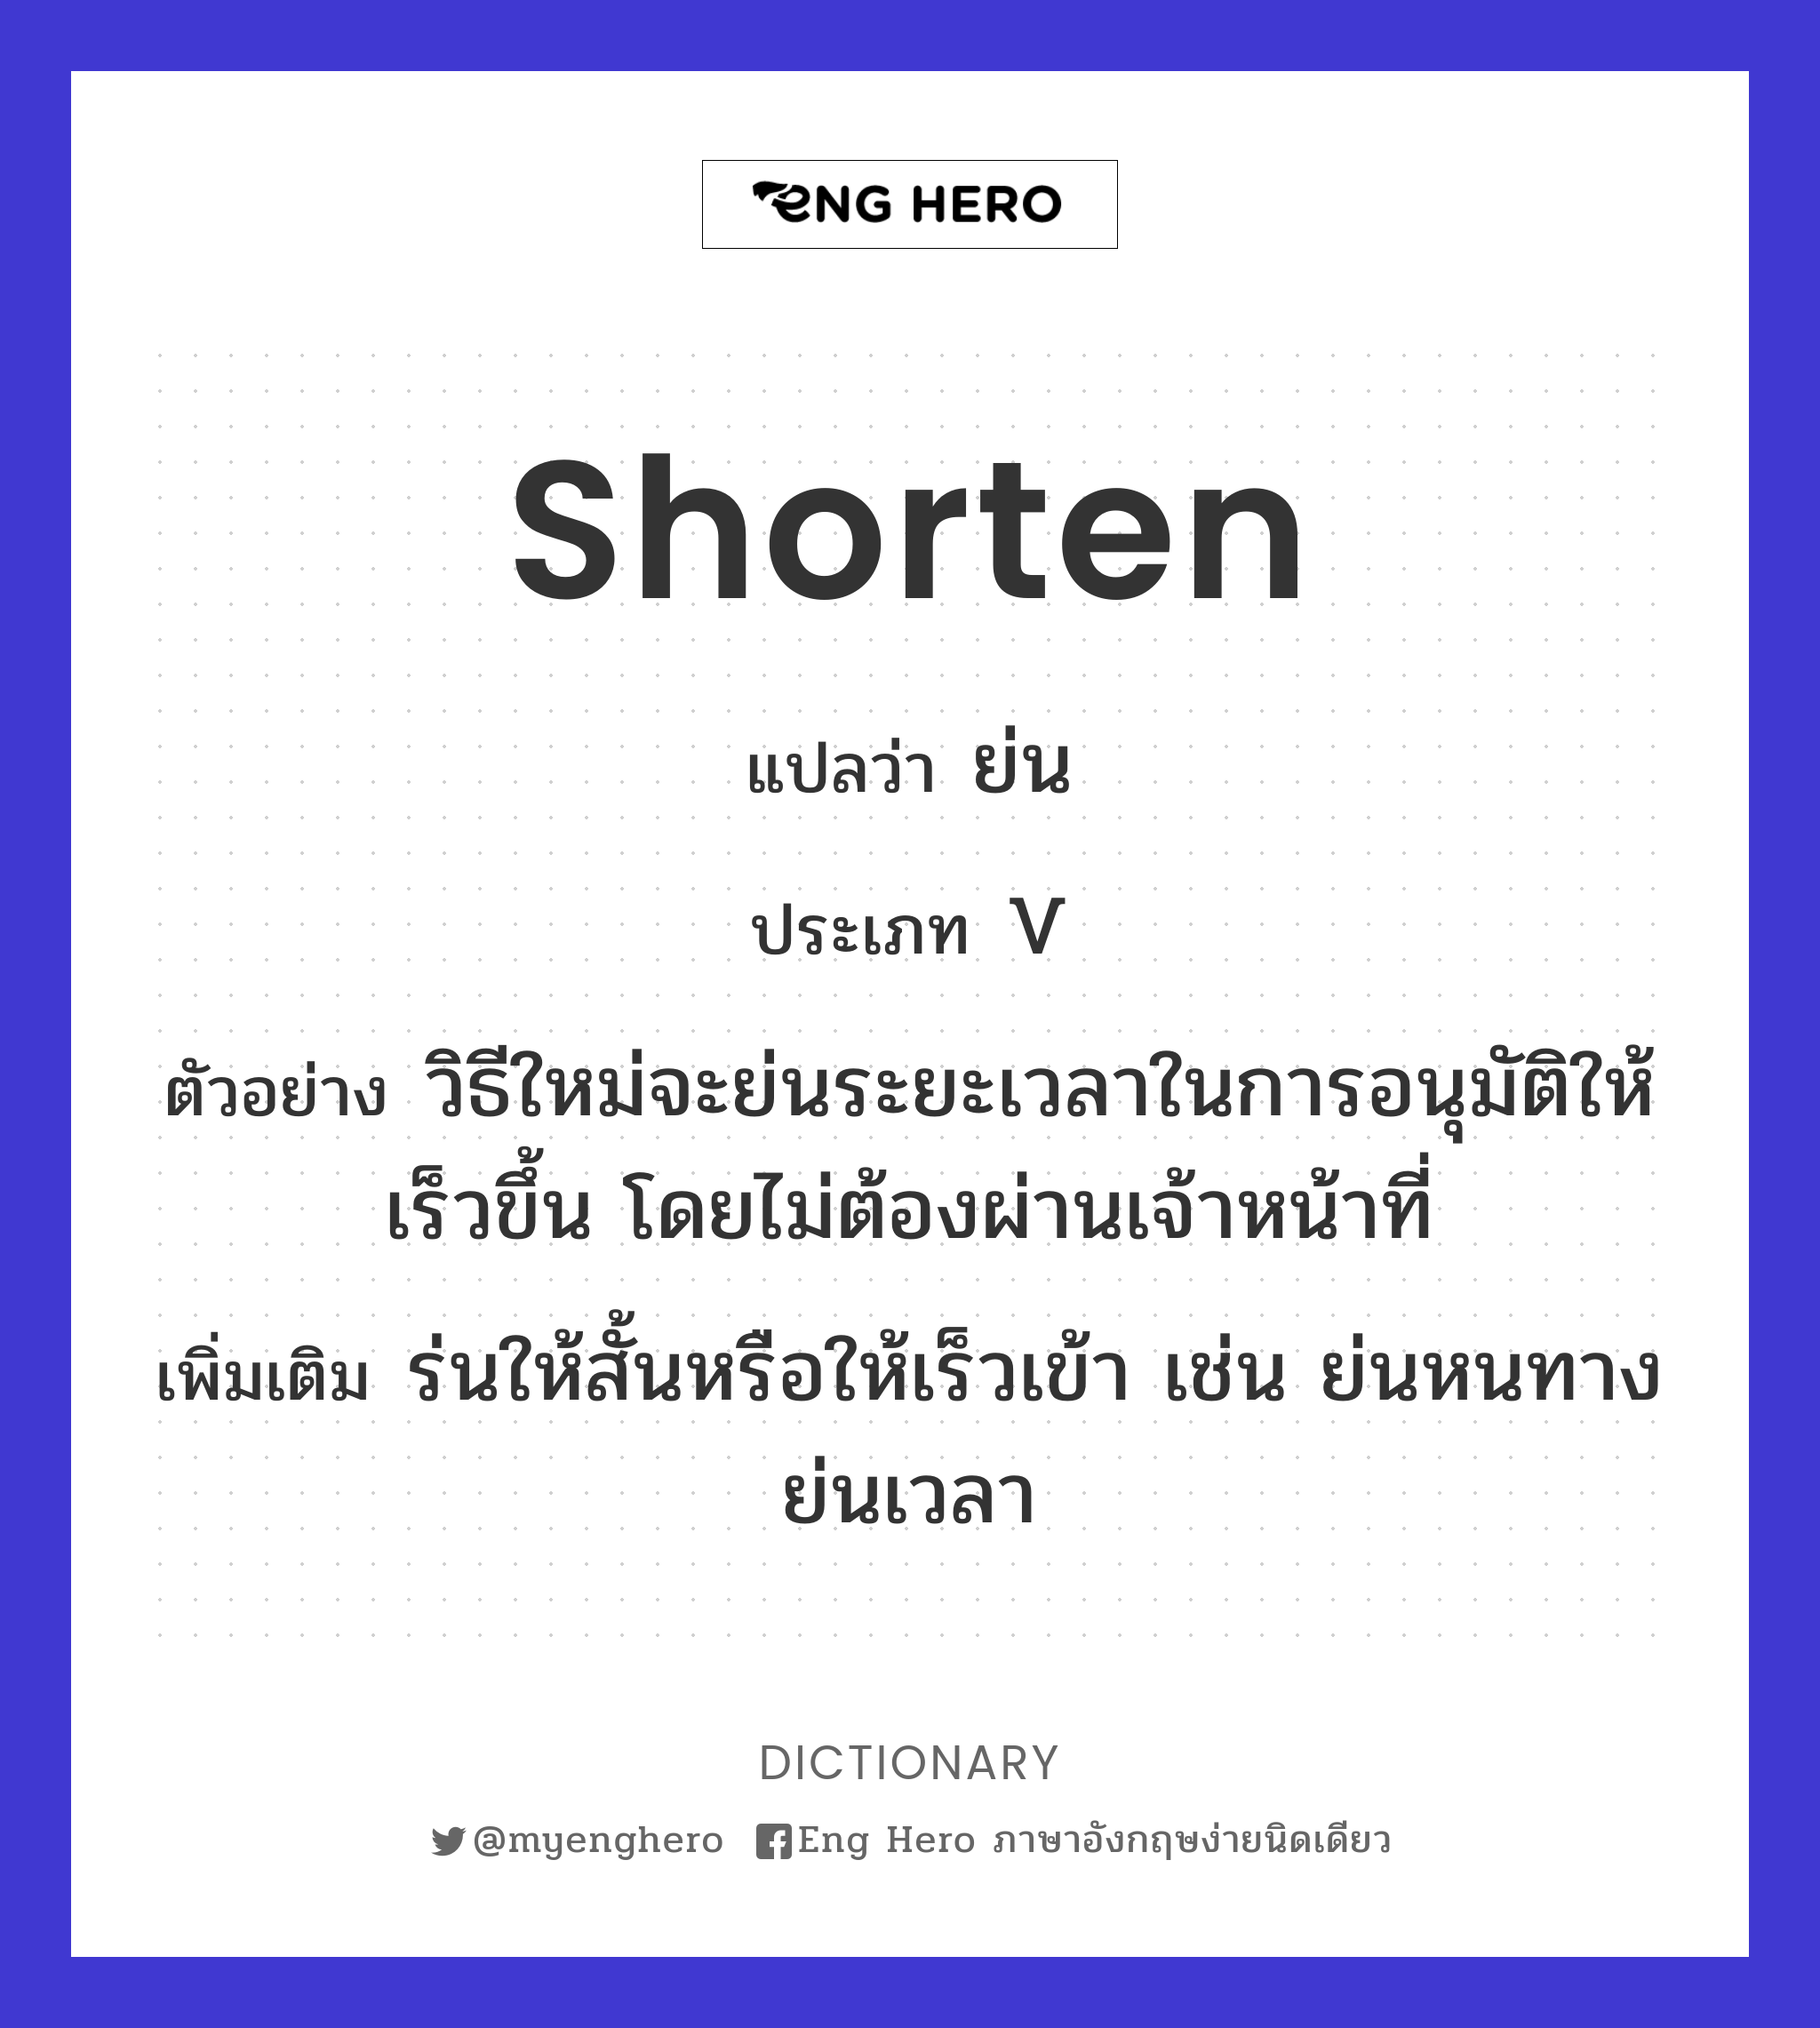 shorten